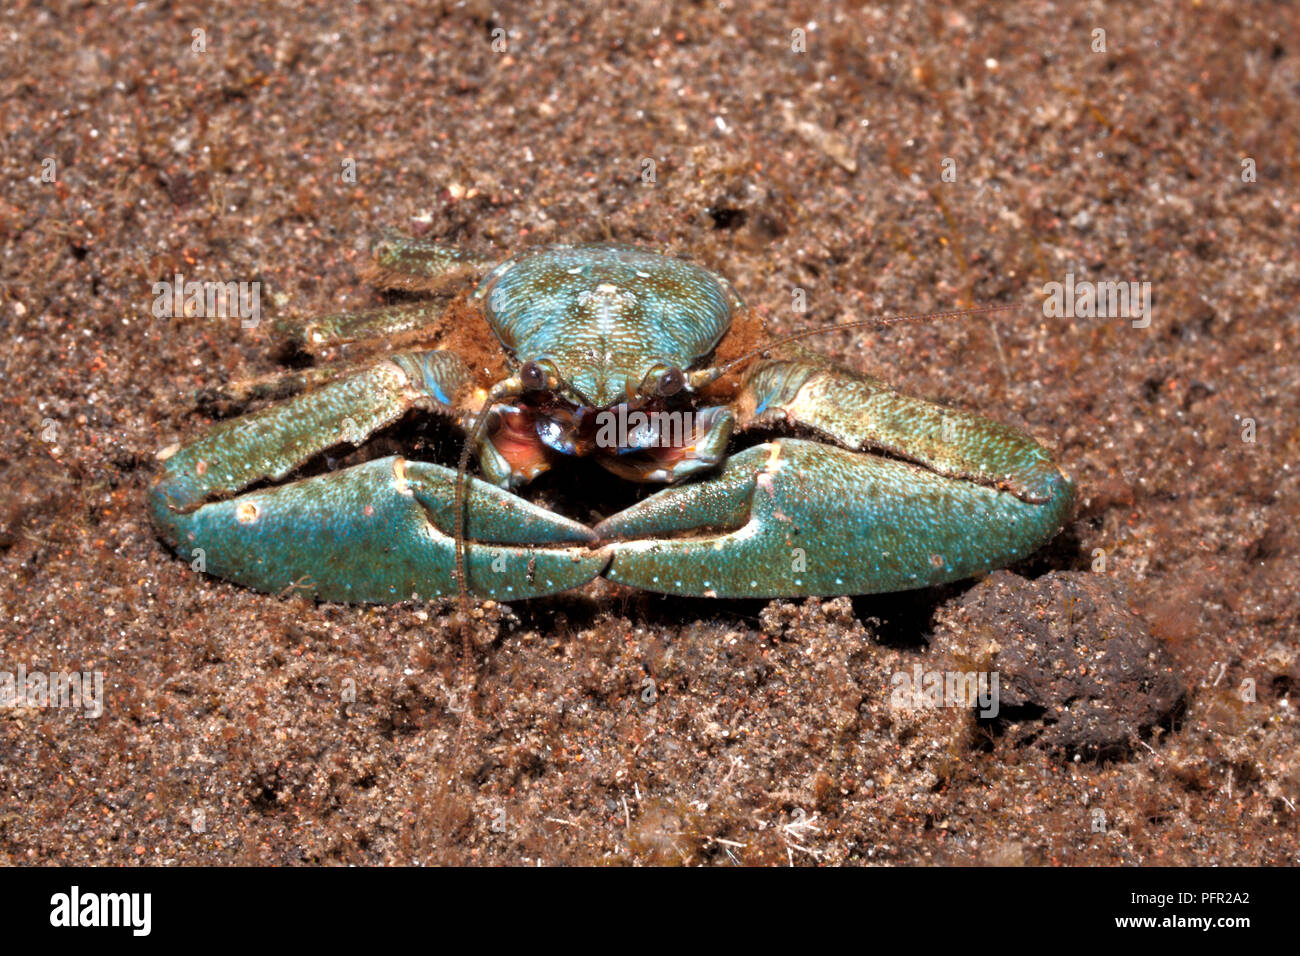 Porcelain Crab, Petrolisthes sp. Tulamben, Bali, Indonesia. Bali Sea, Indian Ocean Stock Photo